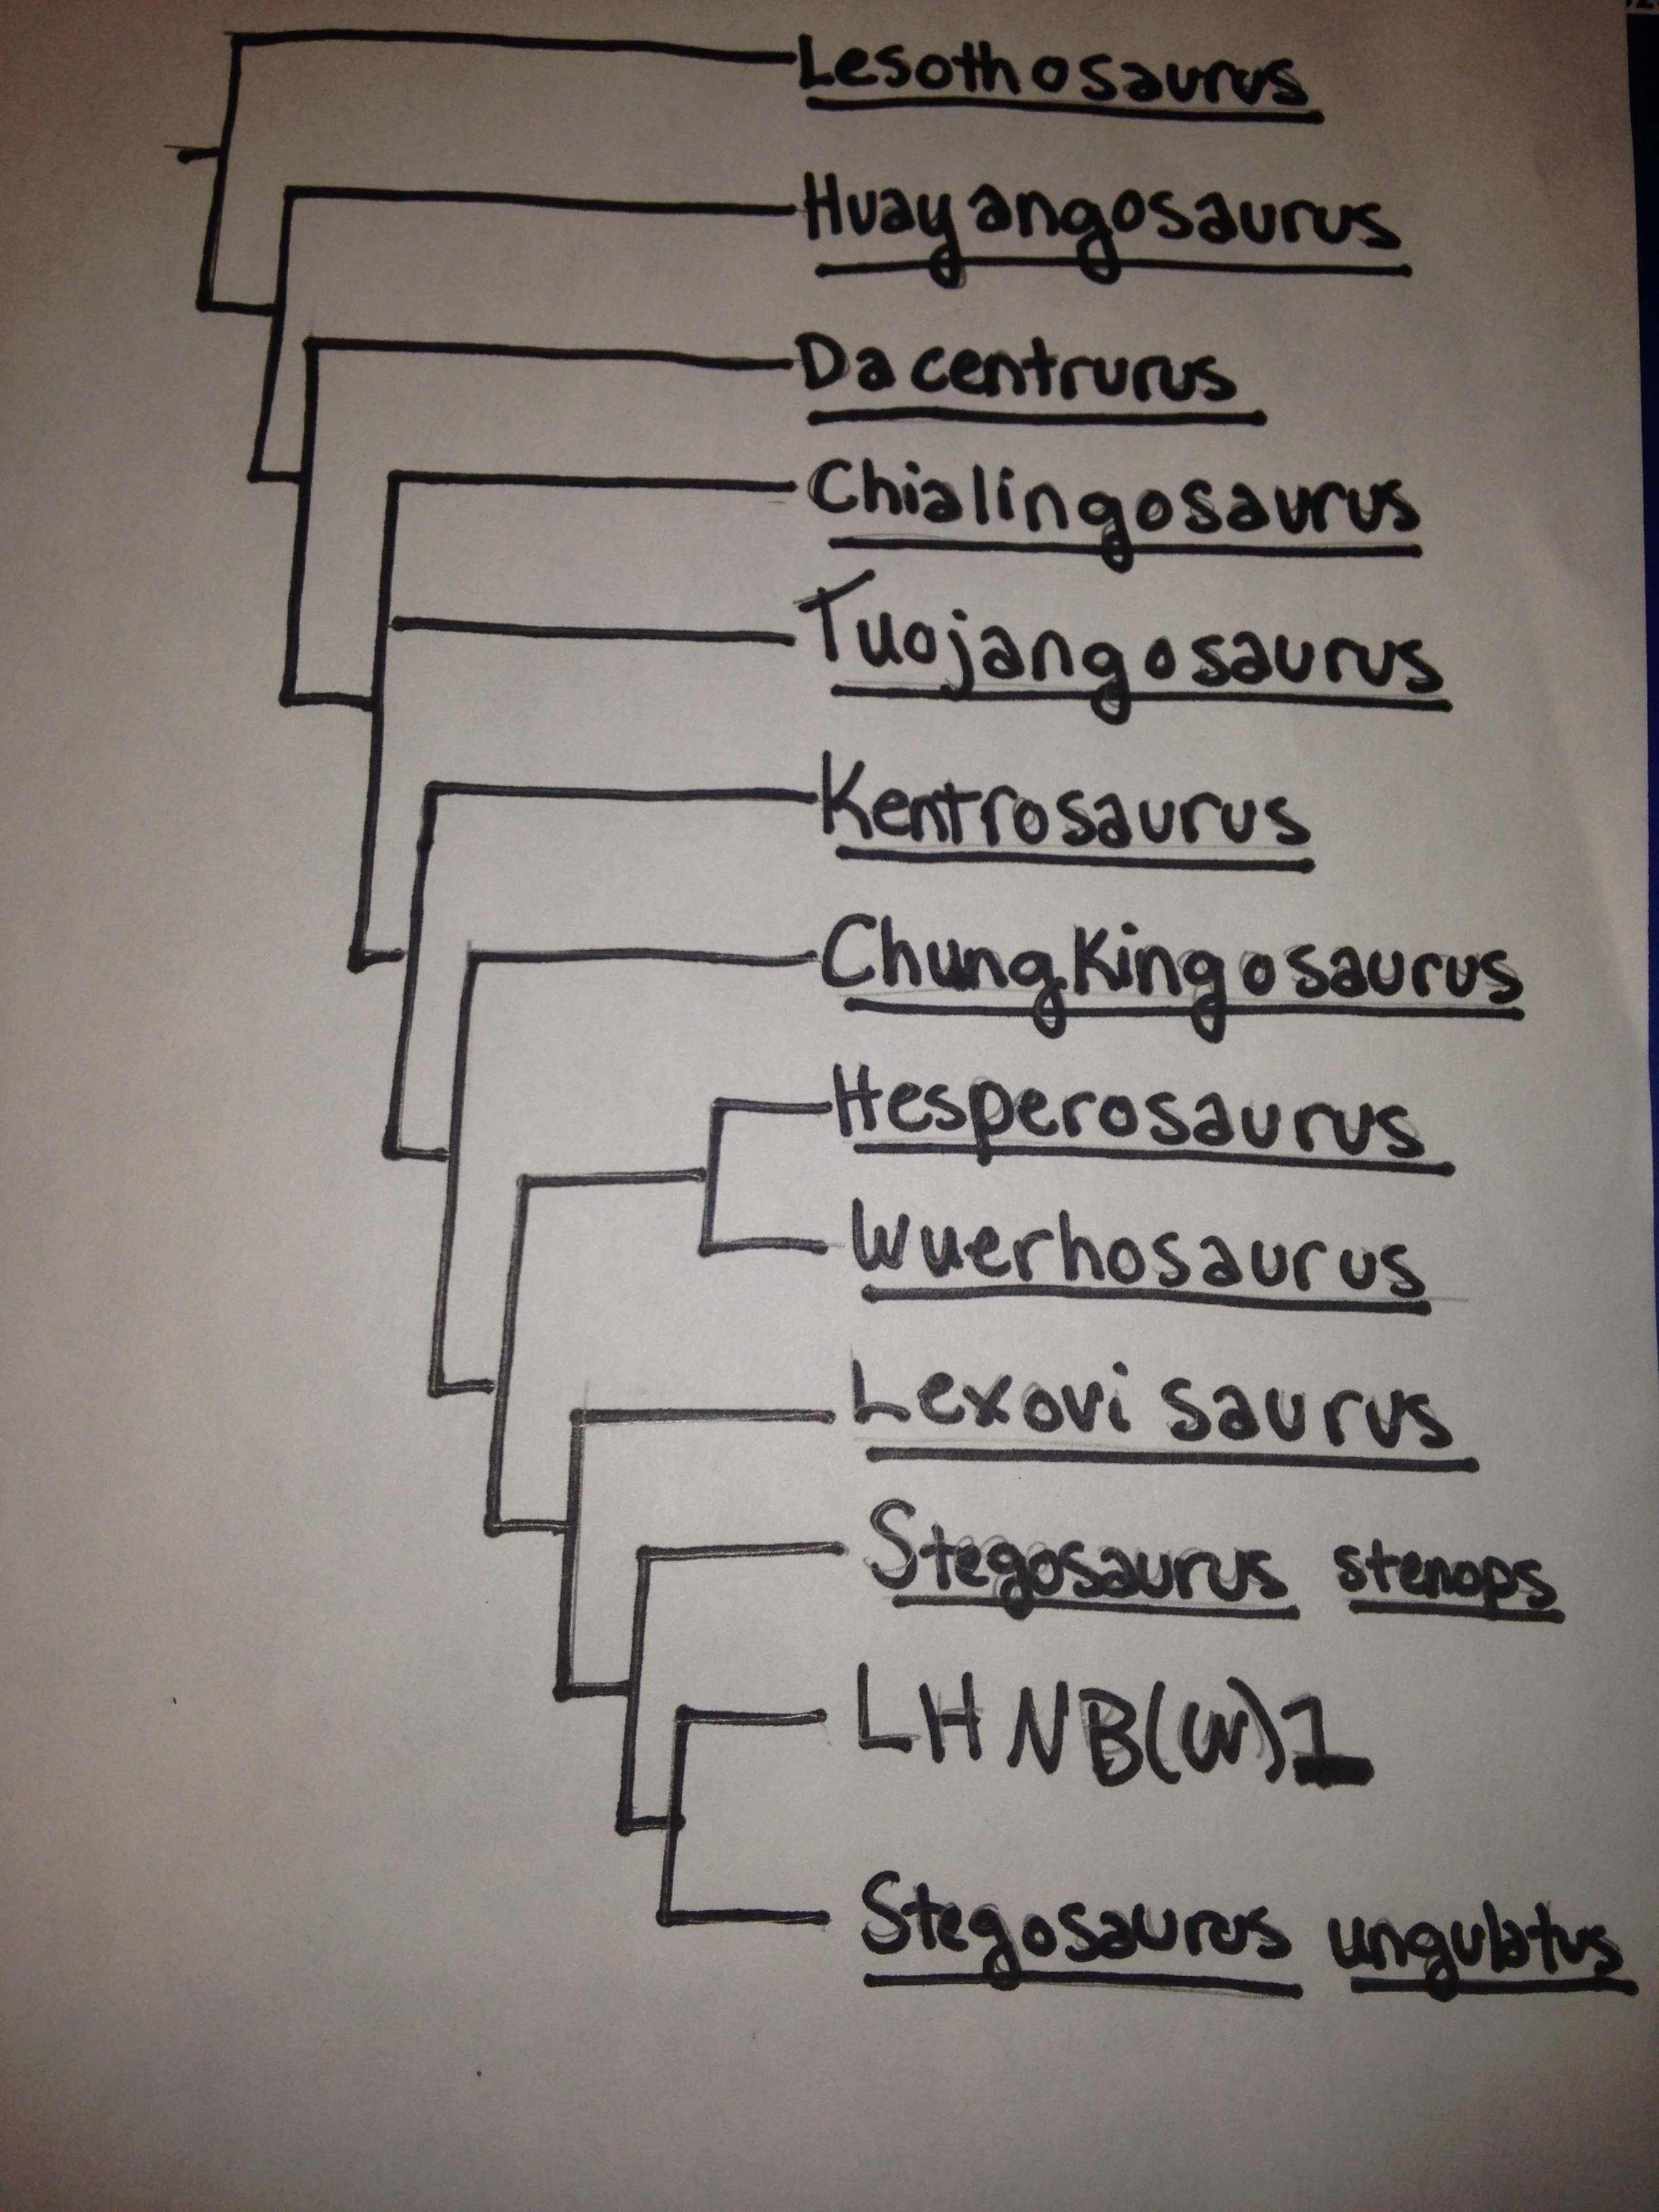 Stegosaurus phylogenetic tree